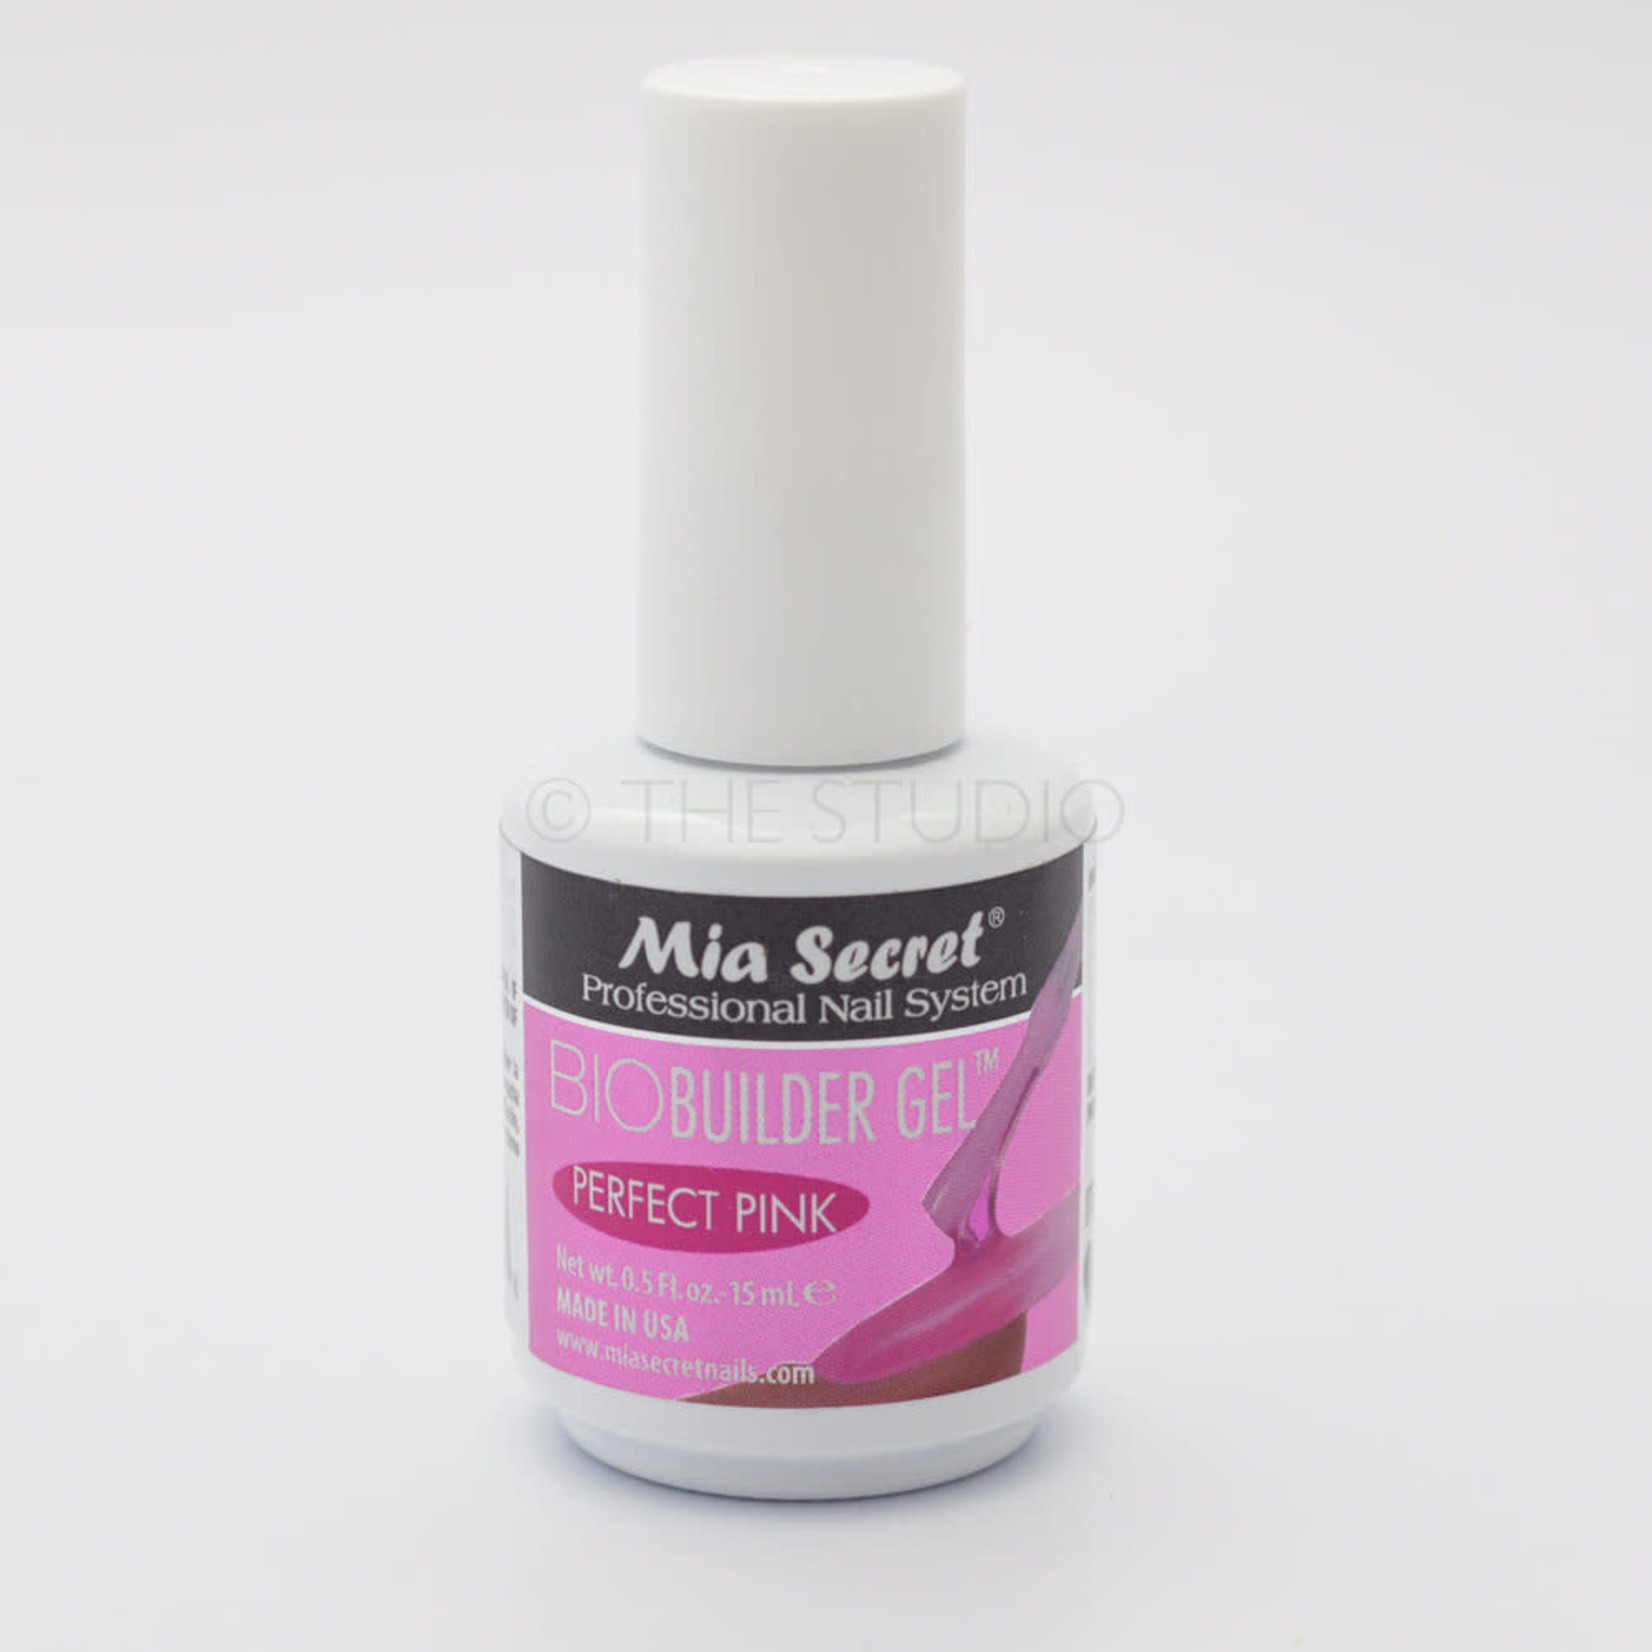 Mia Secret Mia Secret - Bio Builder Gel Bottle - Perfect Pink - 0.5 oz